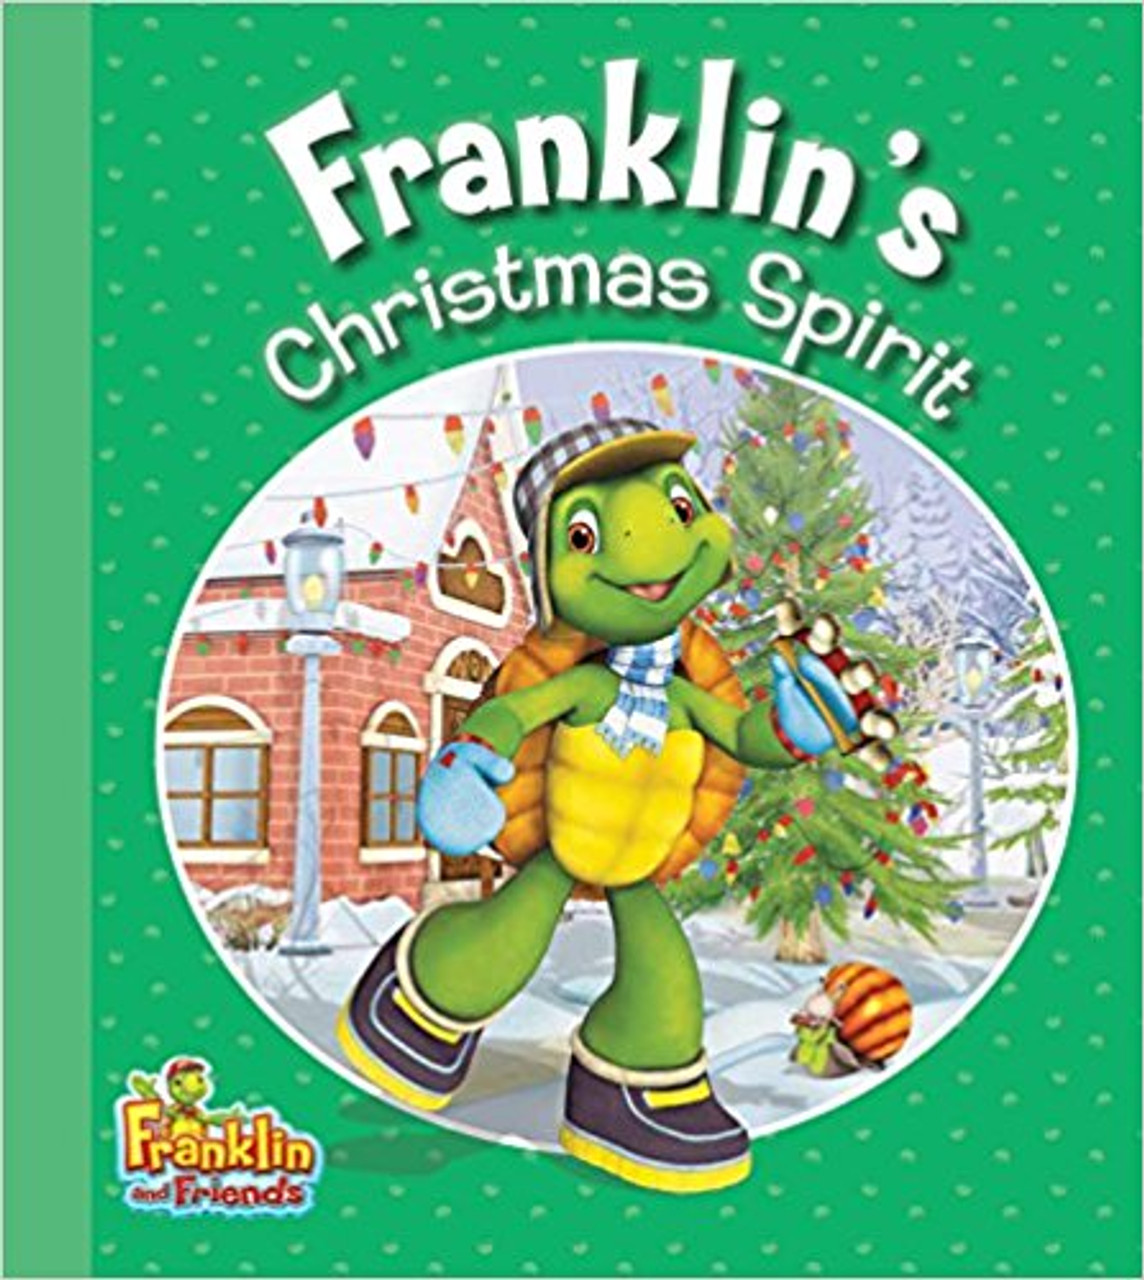 Franklin's Christmas Spirit by Harry Endrulat